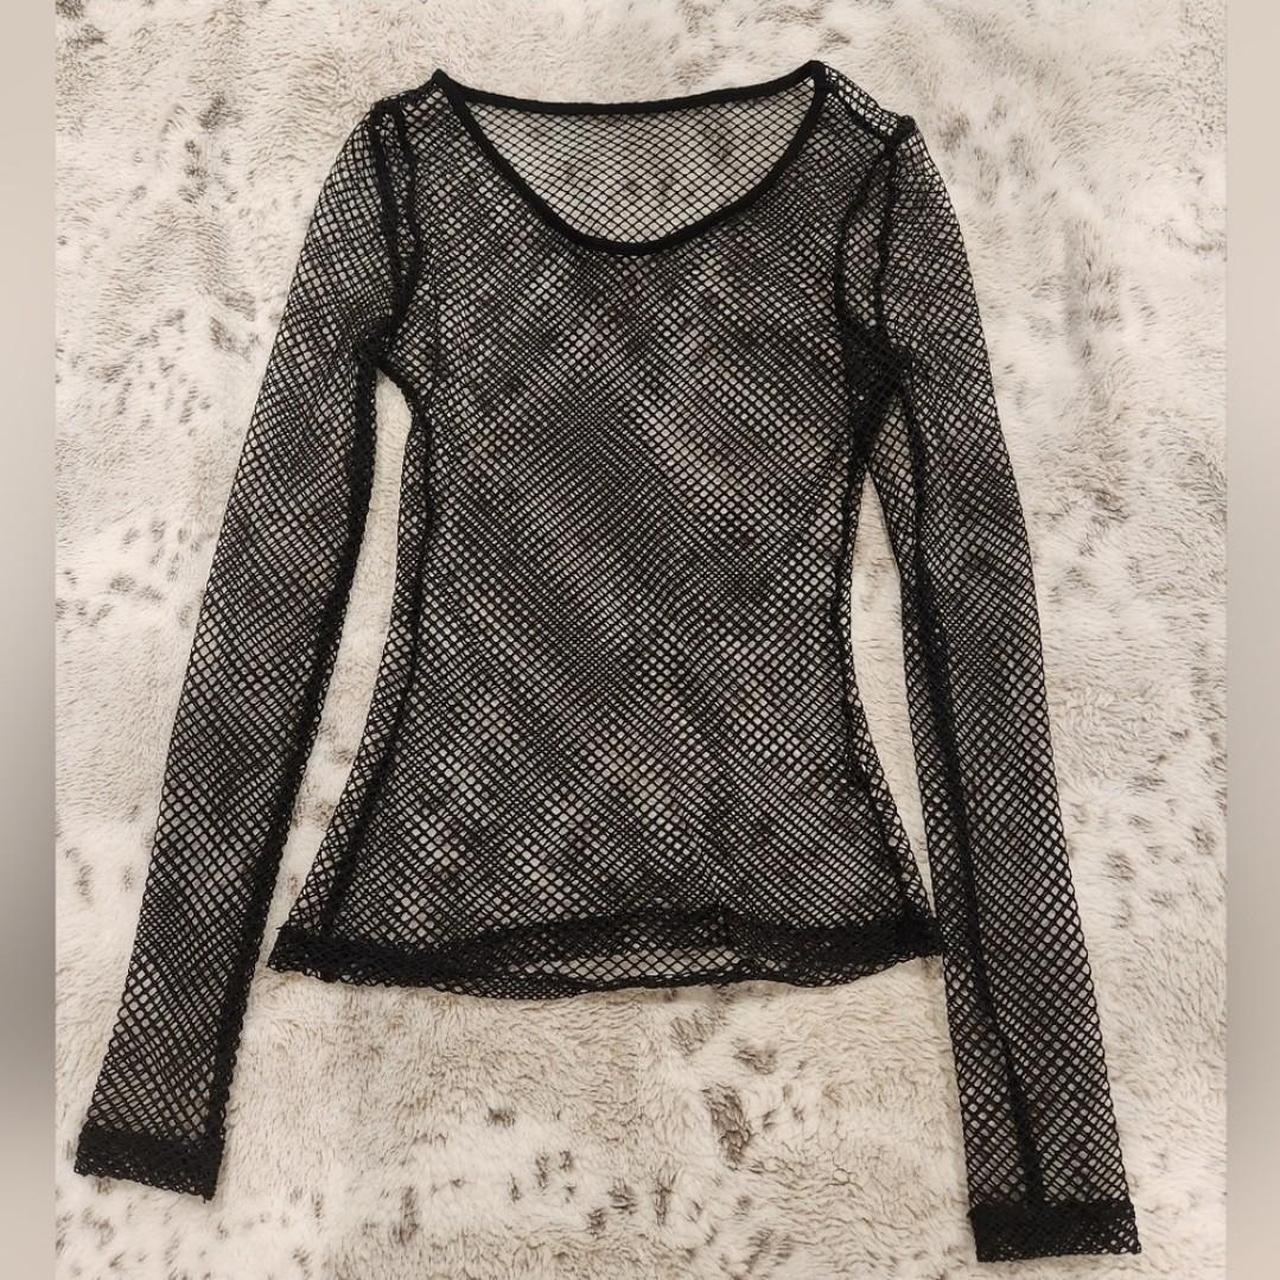 Long sleeve black fishnet mesh shirt - Depop